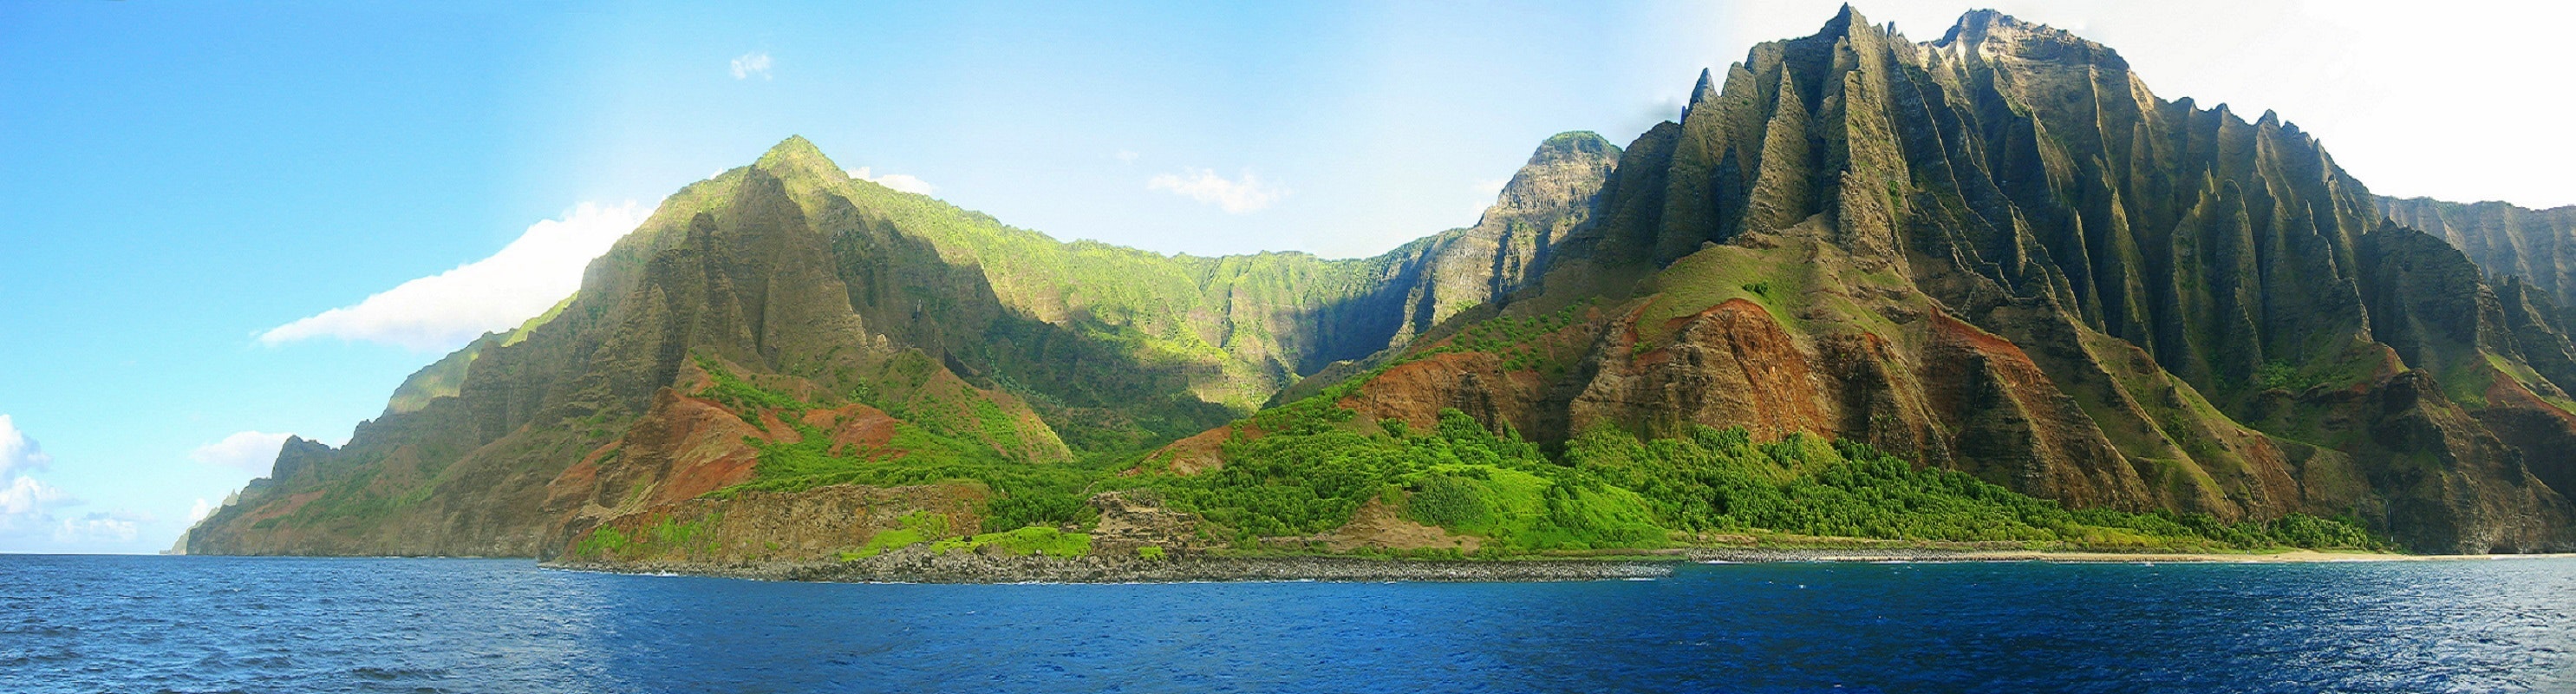 Mountain island landscape photo